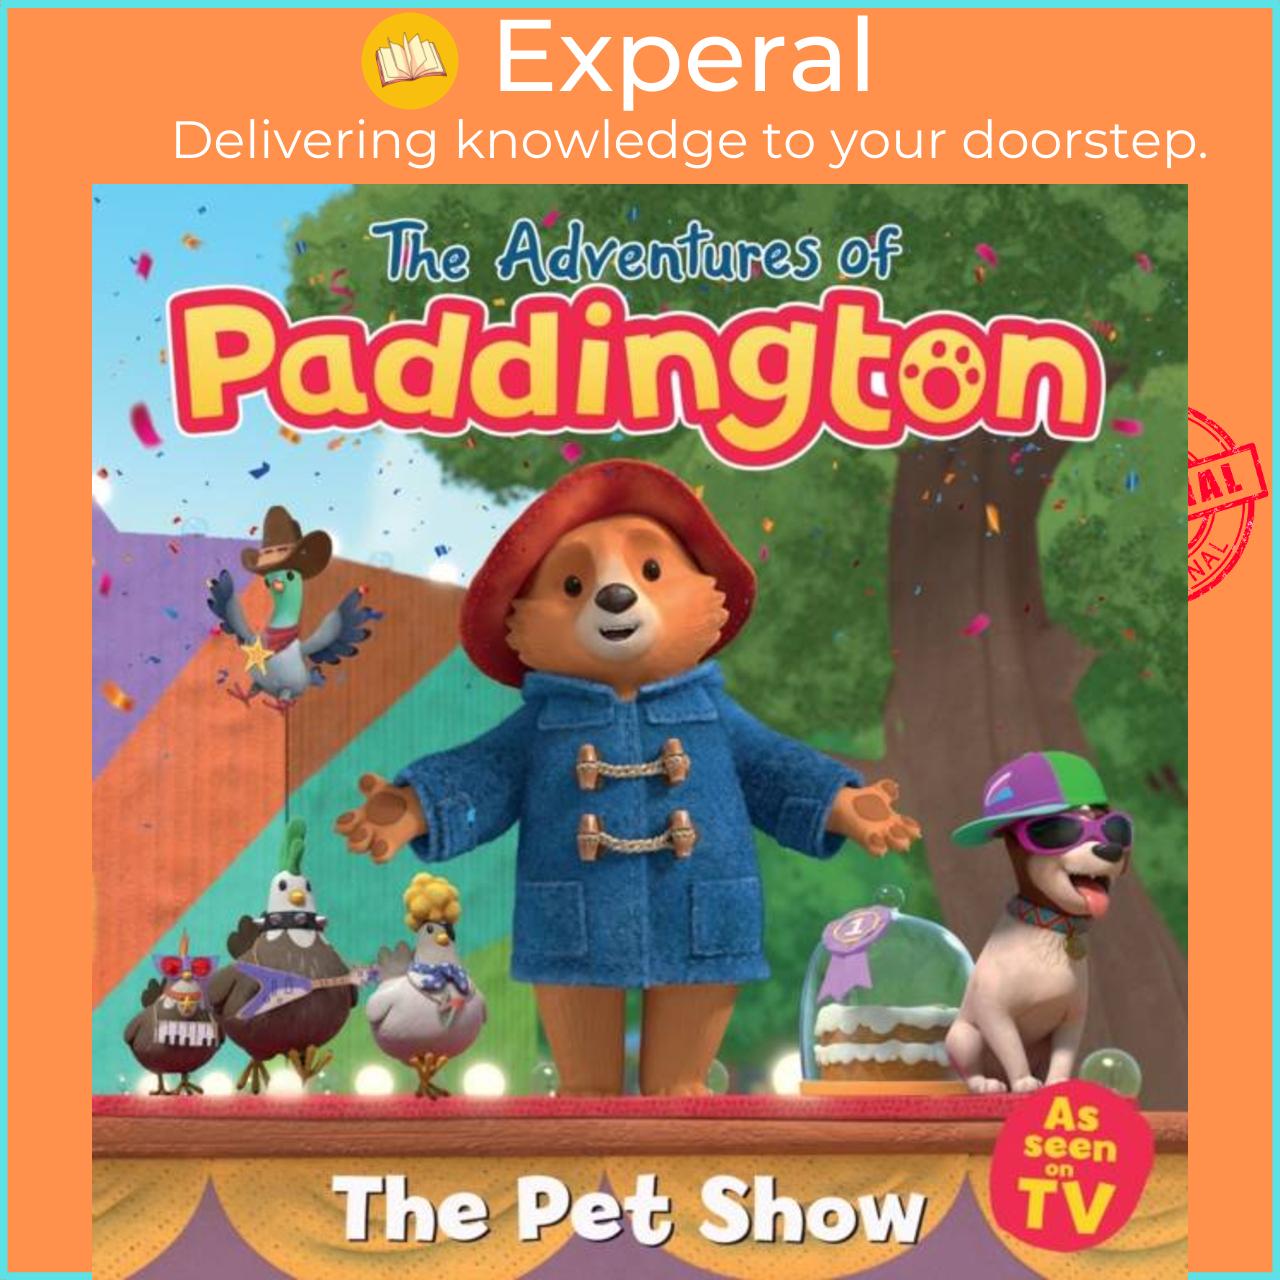 Sách - The Adventures of Paddington: Pet Show by HarperCollins Children's Books (UK edition, paperback)